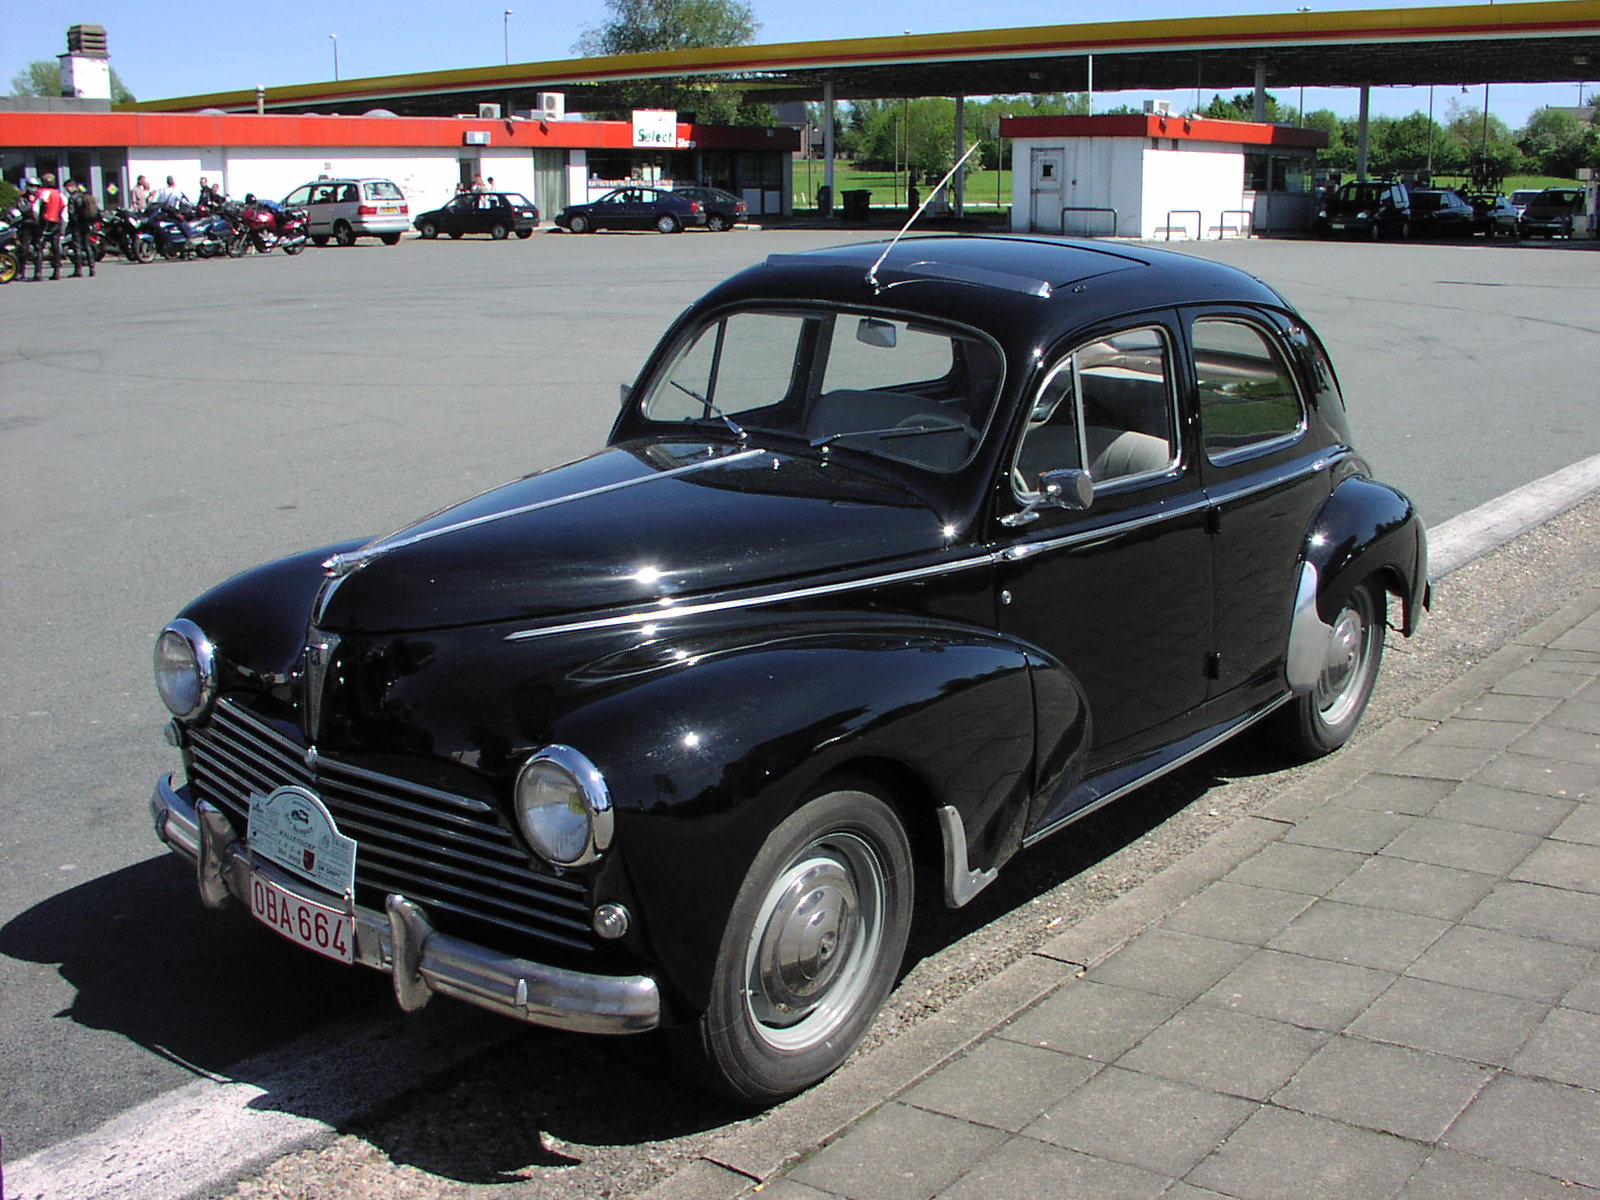 En gammal Peugeot